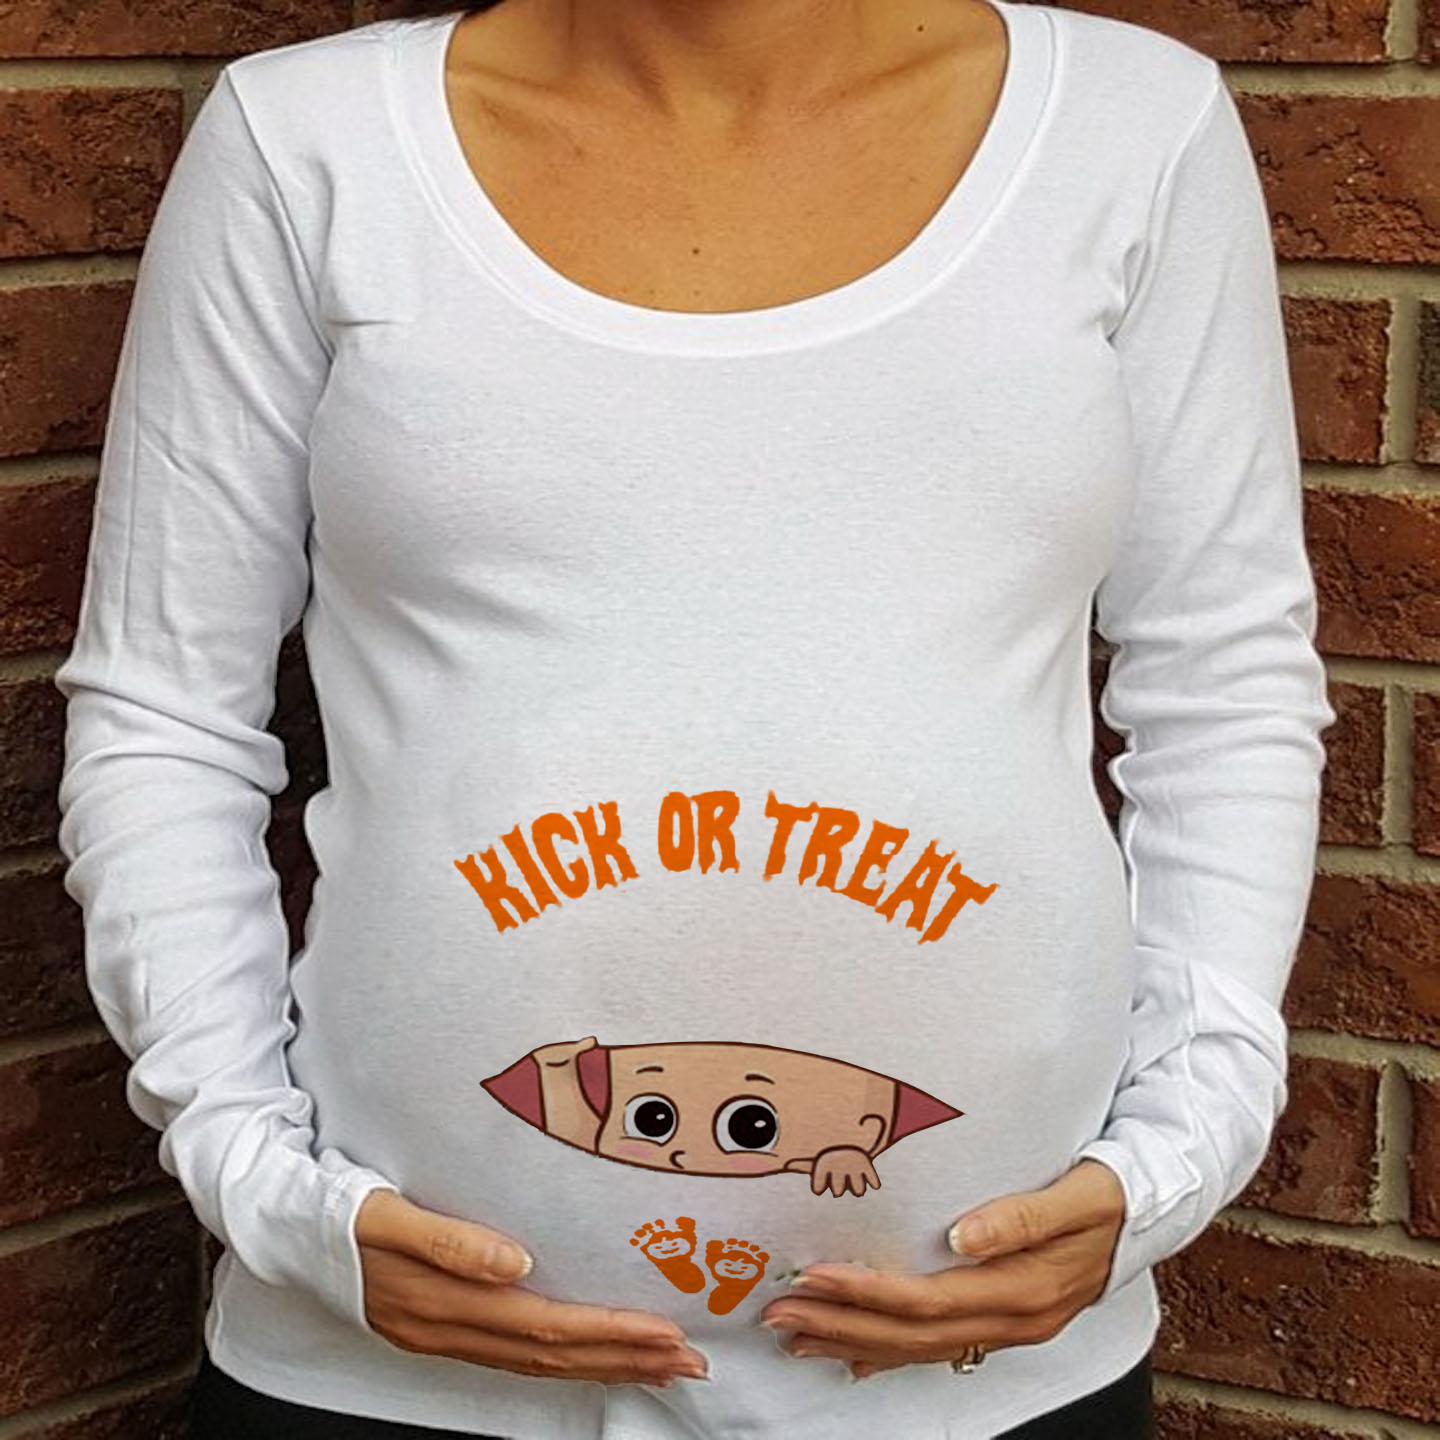 cycle dual gas Kick Or Treat Pregnancy Shirt For Halloween – AZ CUSTOM TEES